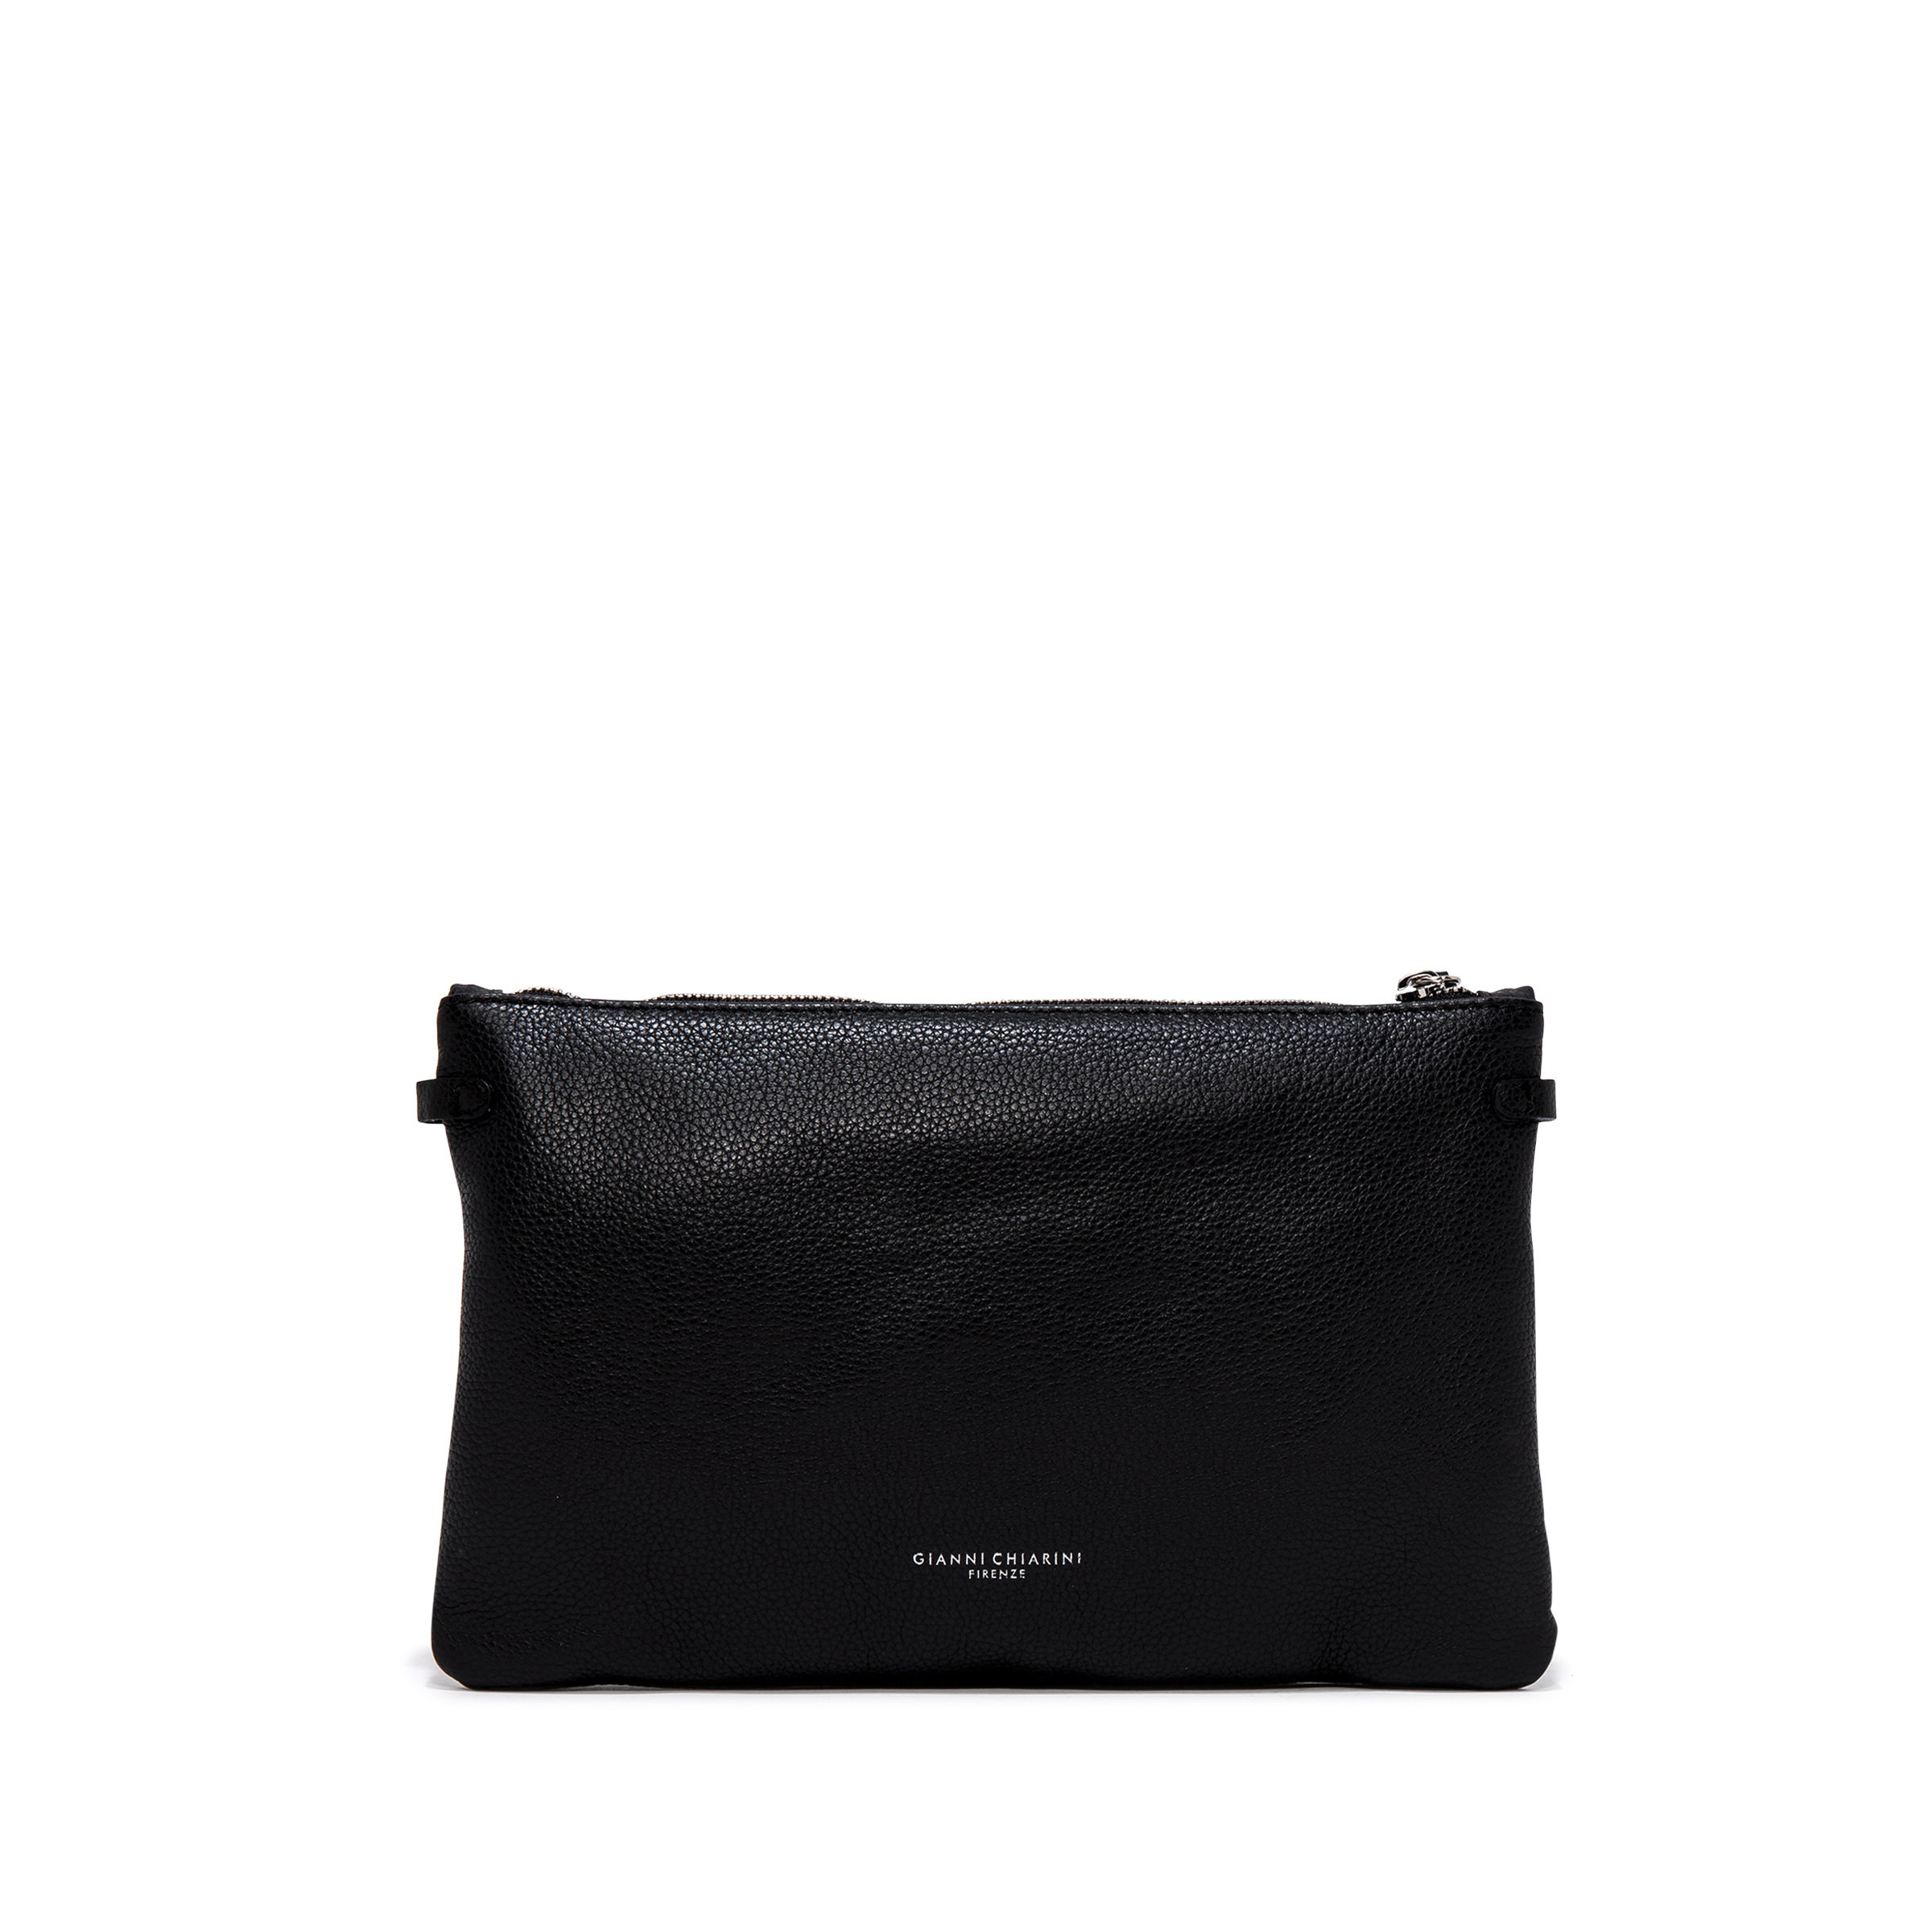 Gianni Chiarini - Hermy leather bag, Black, large image number 1